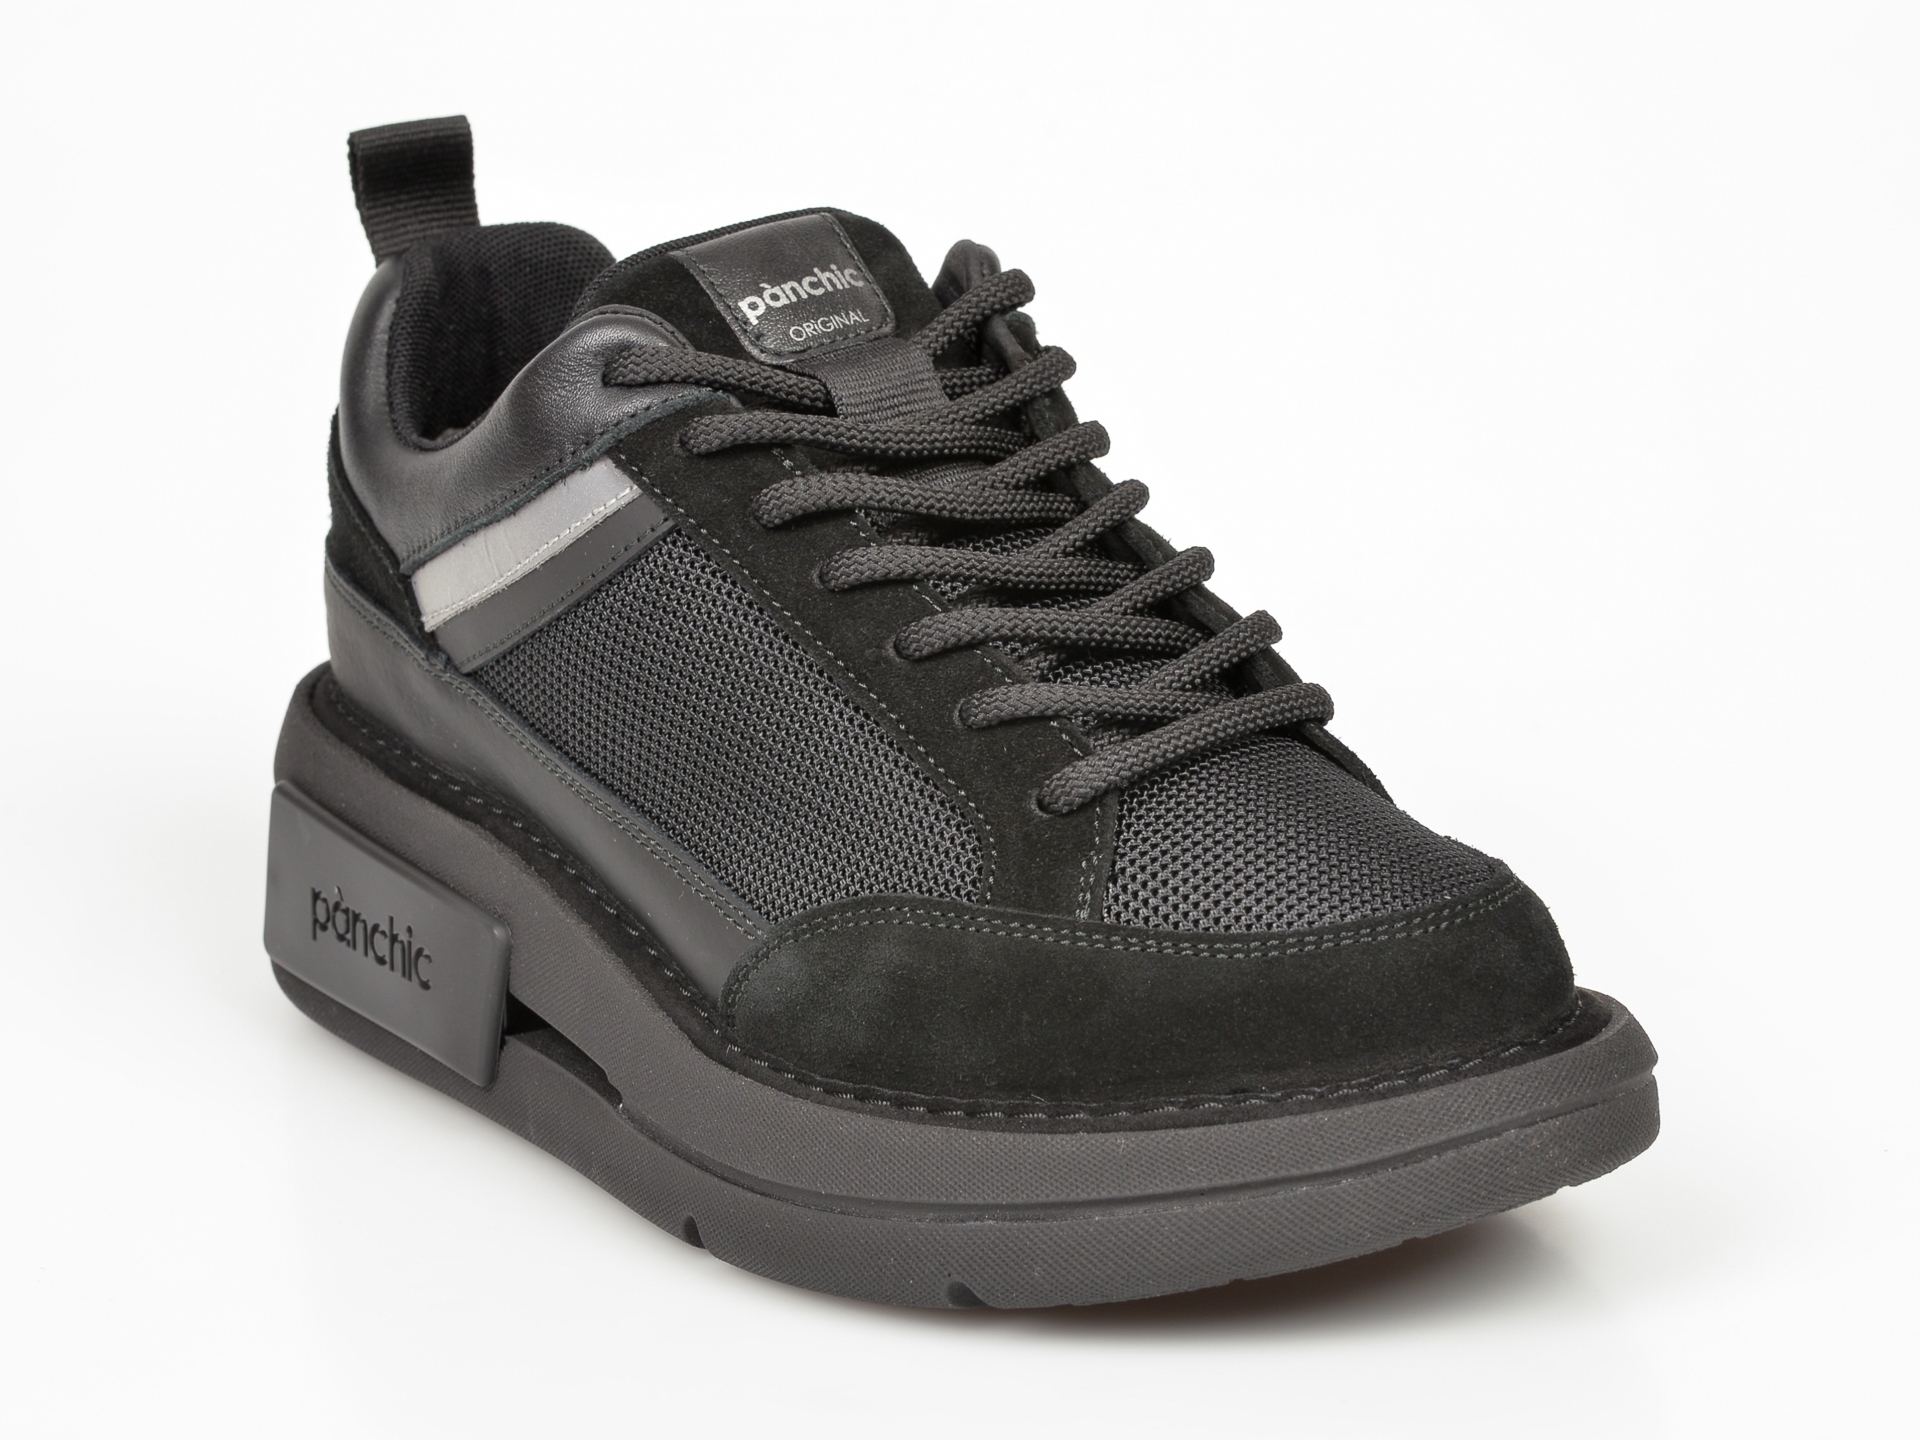 Pantofi sport PANCHIC negri, Innsbru, din material textil si piele naturala